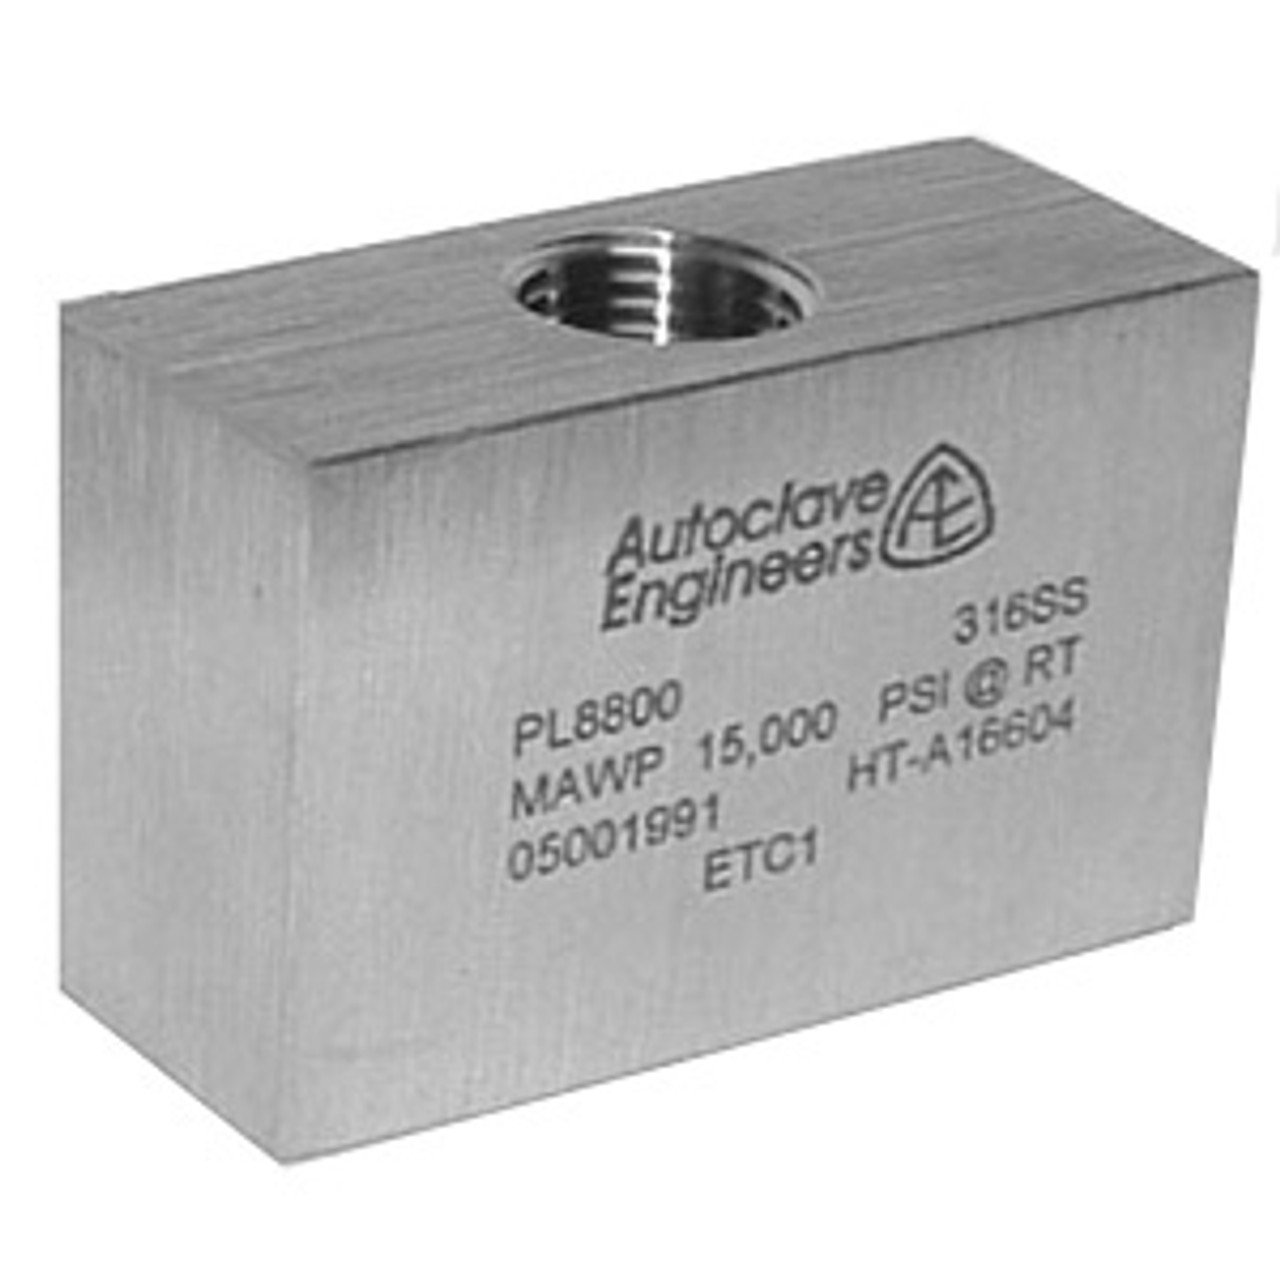 Autoclave Engineers PL6600